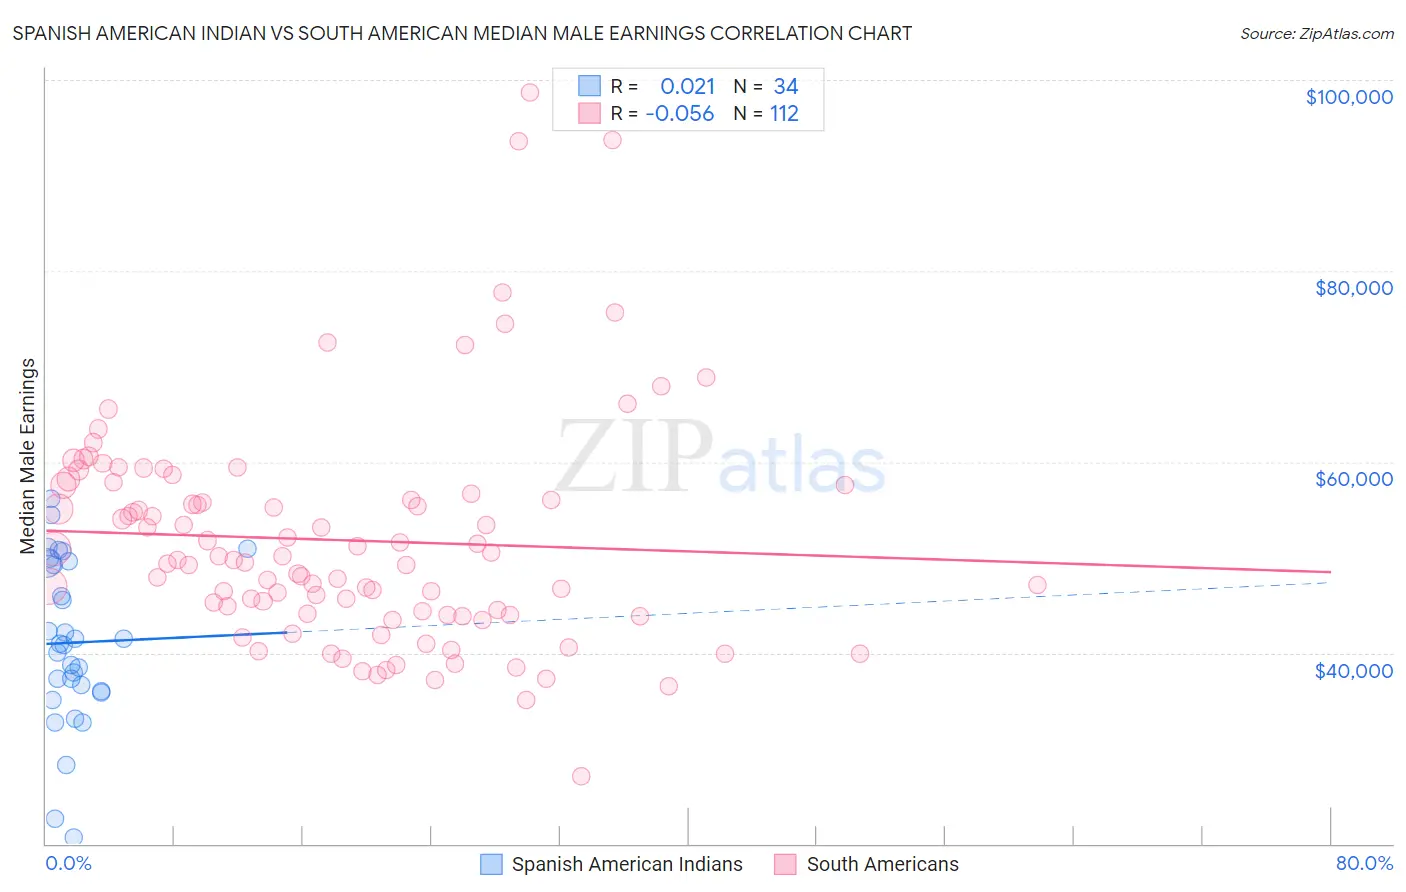 Spanish American Indian vs South American Median Male Earnings